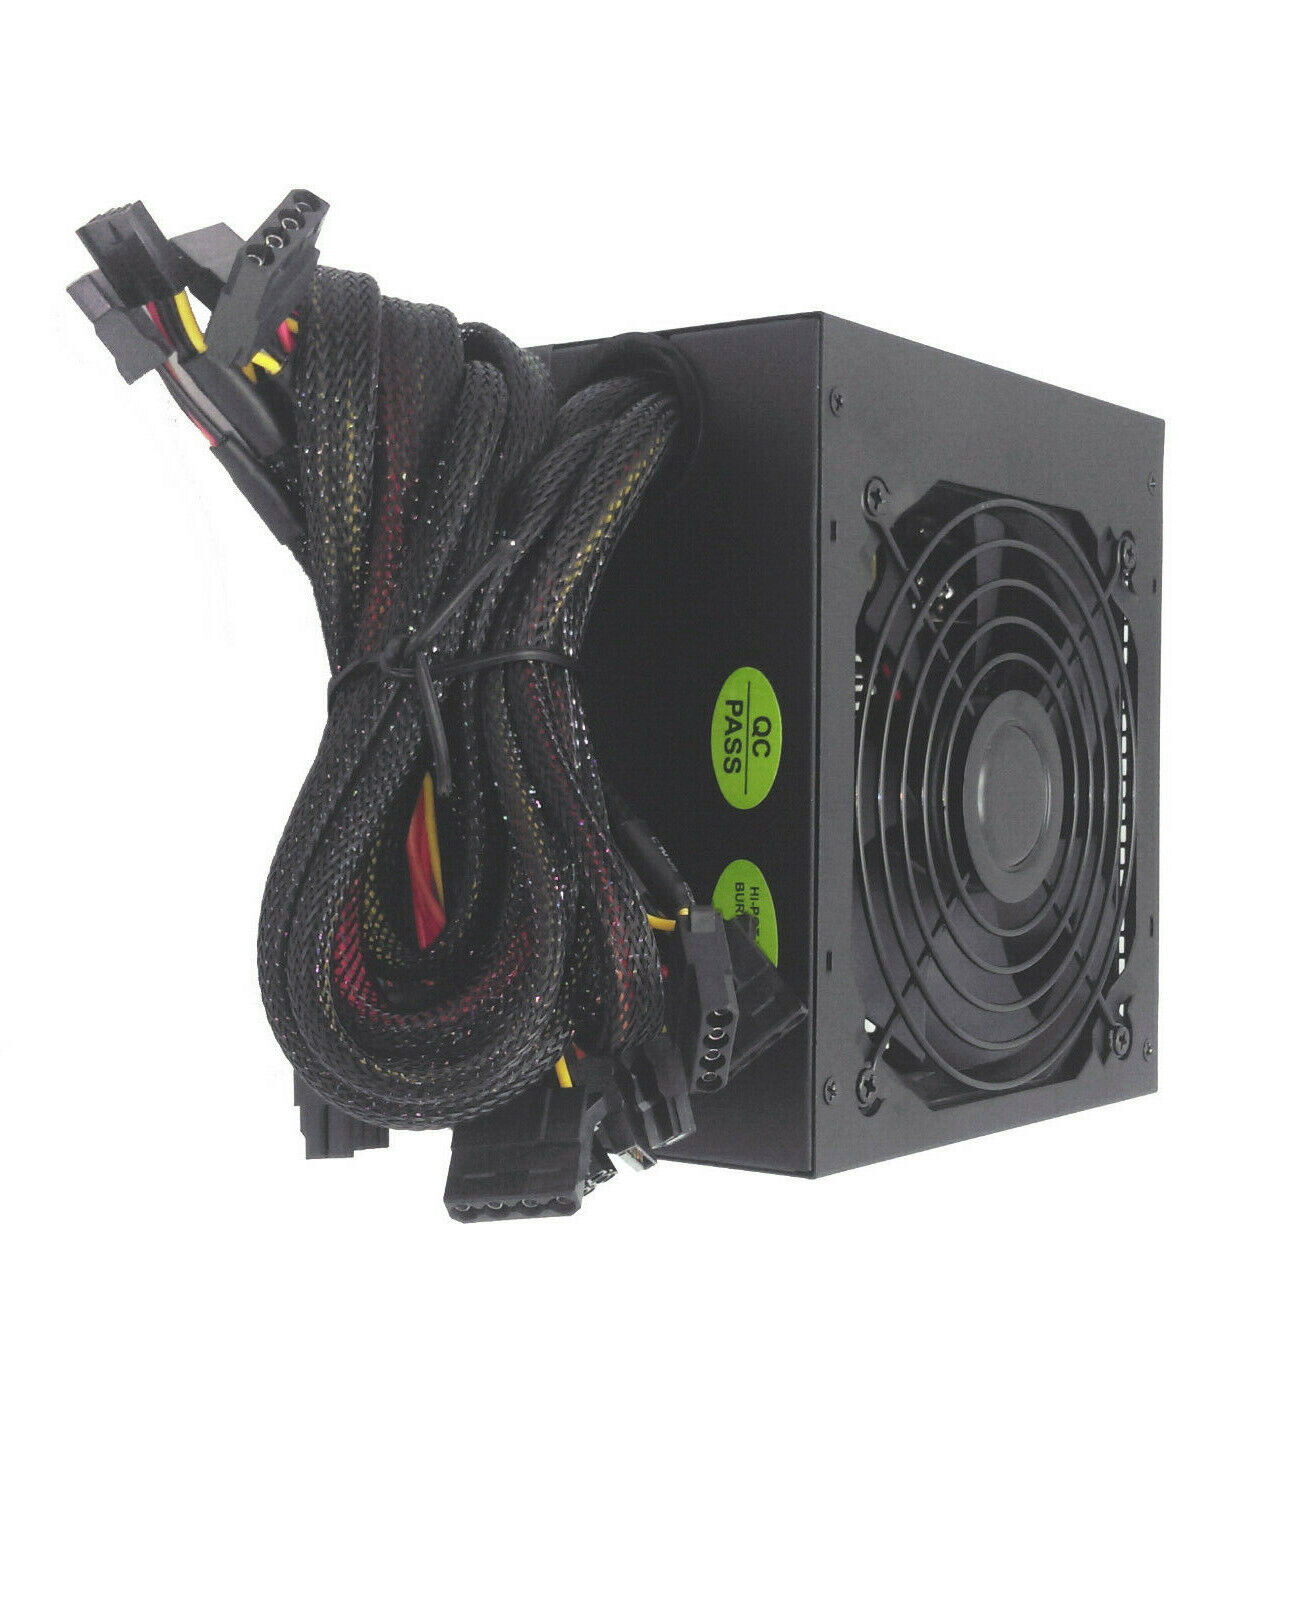 New 680W Black Gaming PC Silent 120mm Fan ATX 12V V2.0 6/8-pin PCIE Power Supply